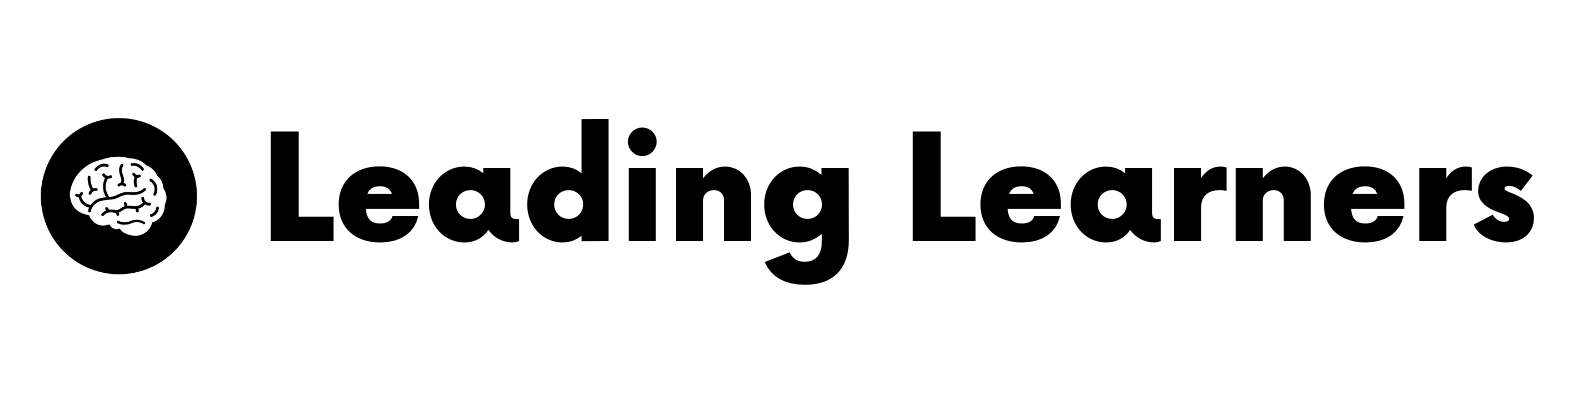 Leading Learners Media Kit